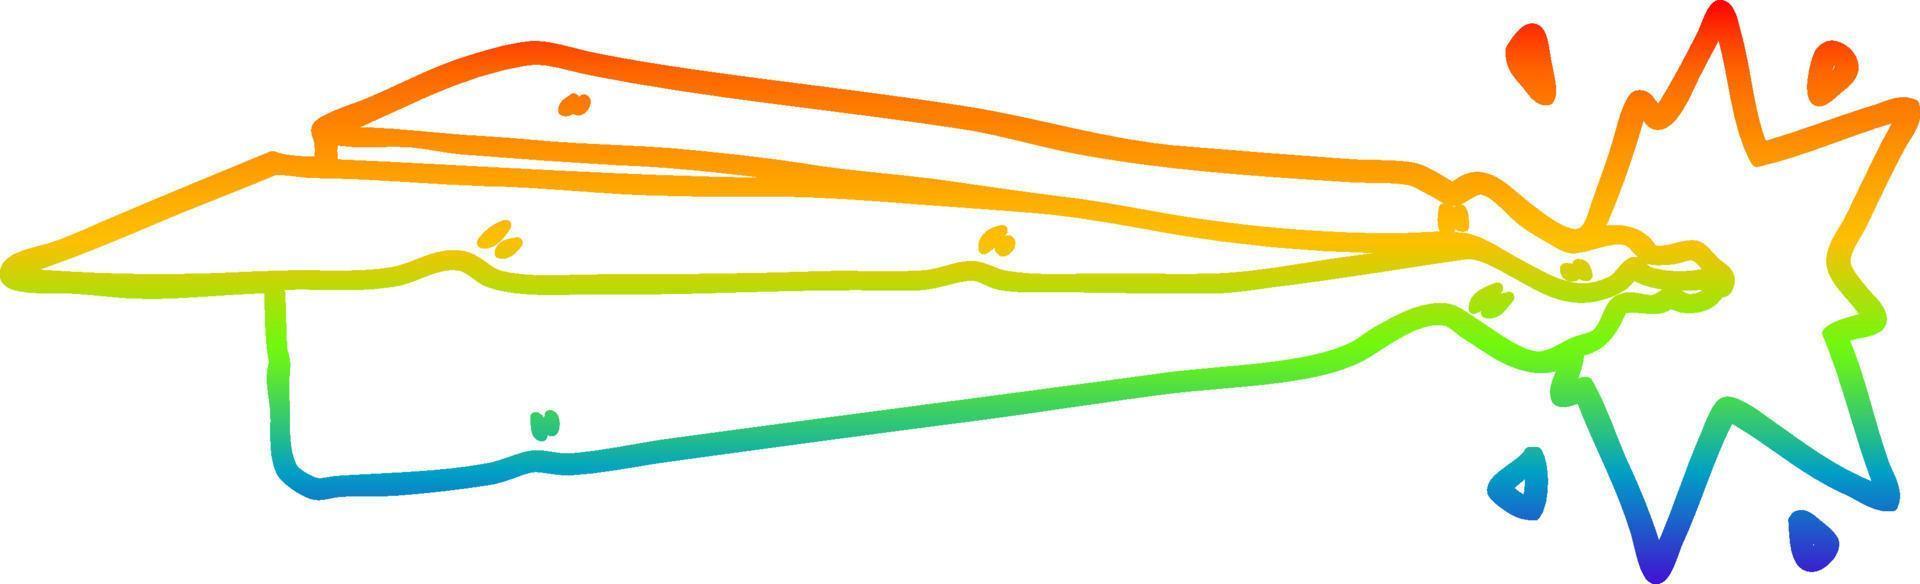 avión de papel de dibujos animados de dibujo de línea de degradado de arco iris vector